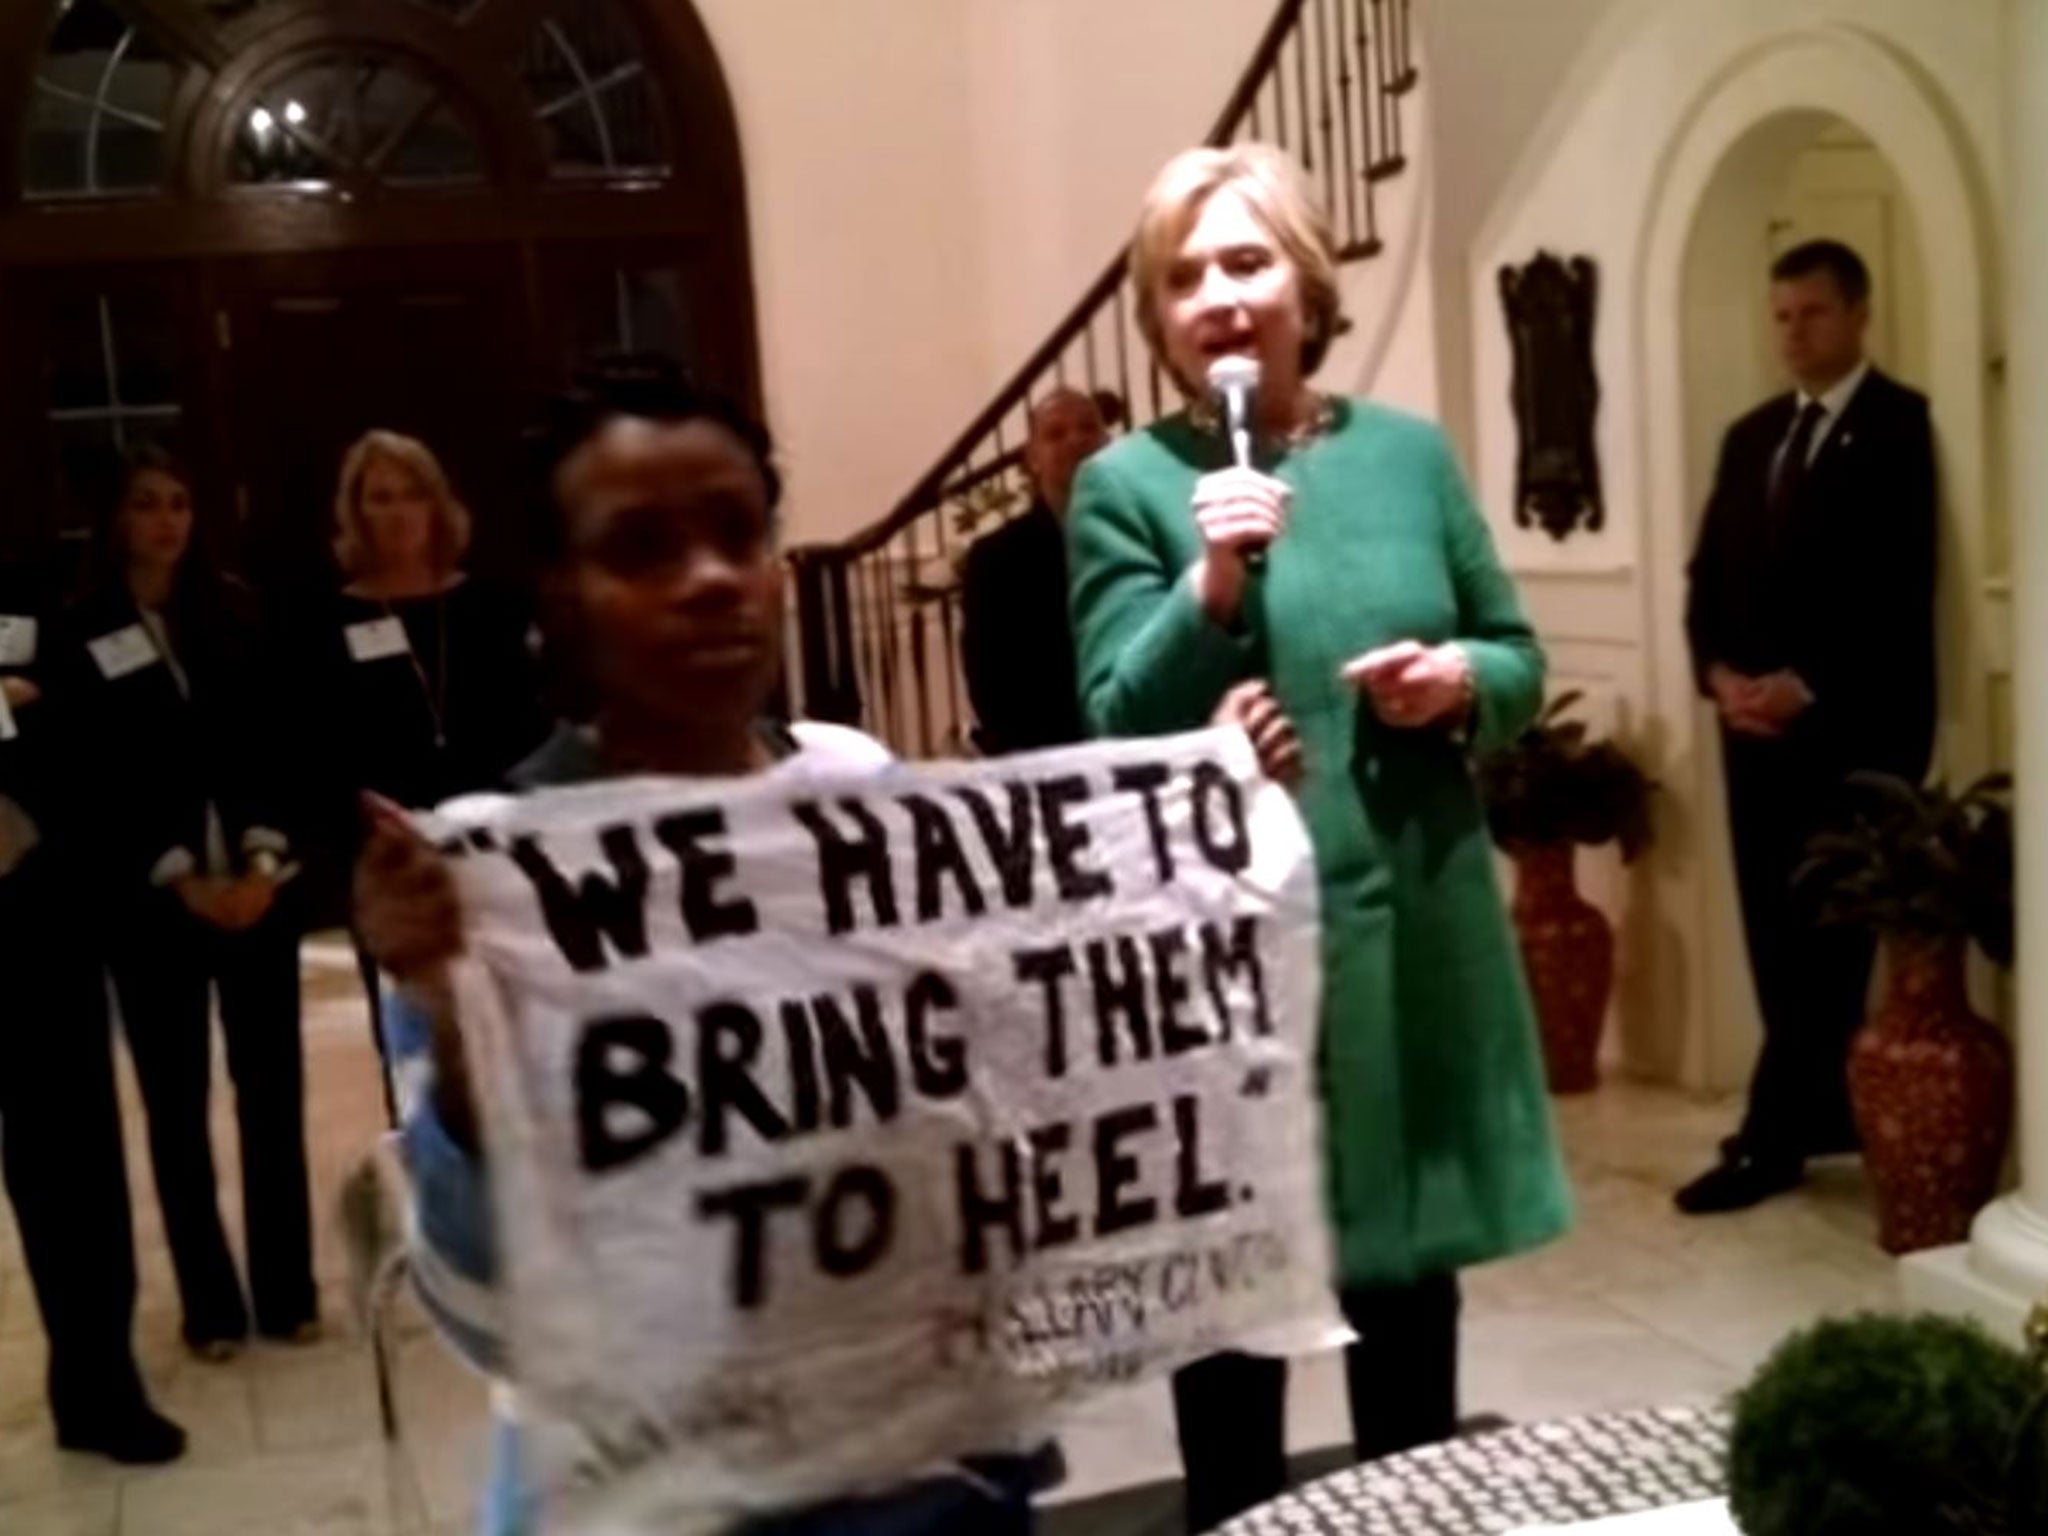 A BlackLivesMatter protester interrupting Hillary Clinton this week